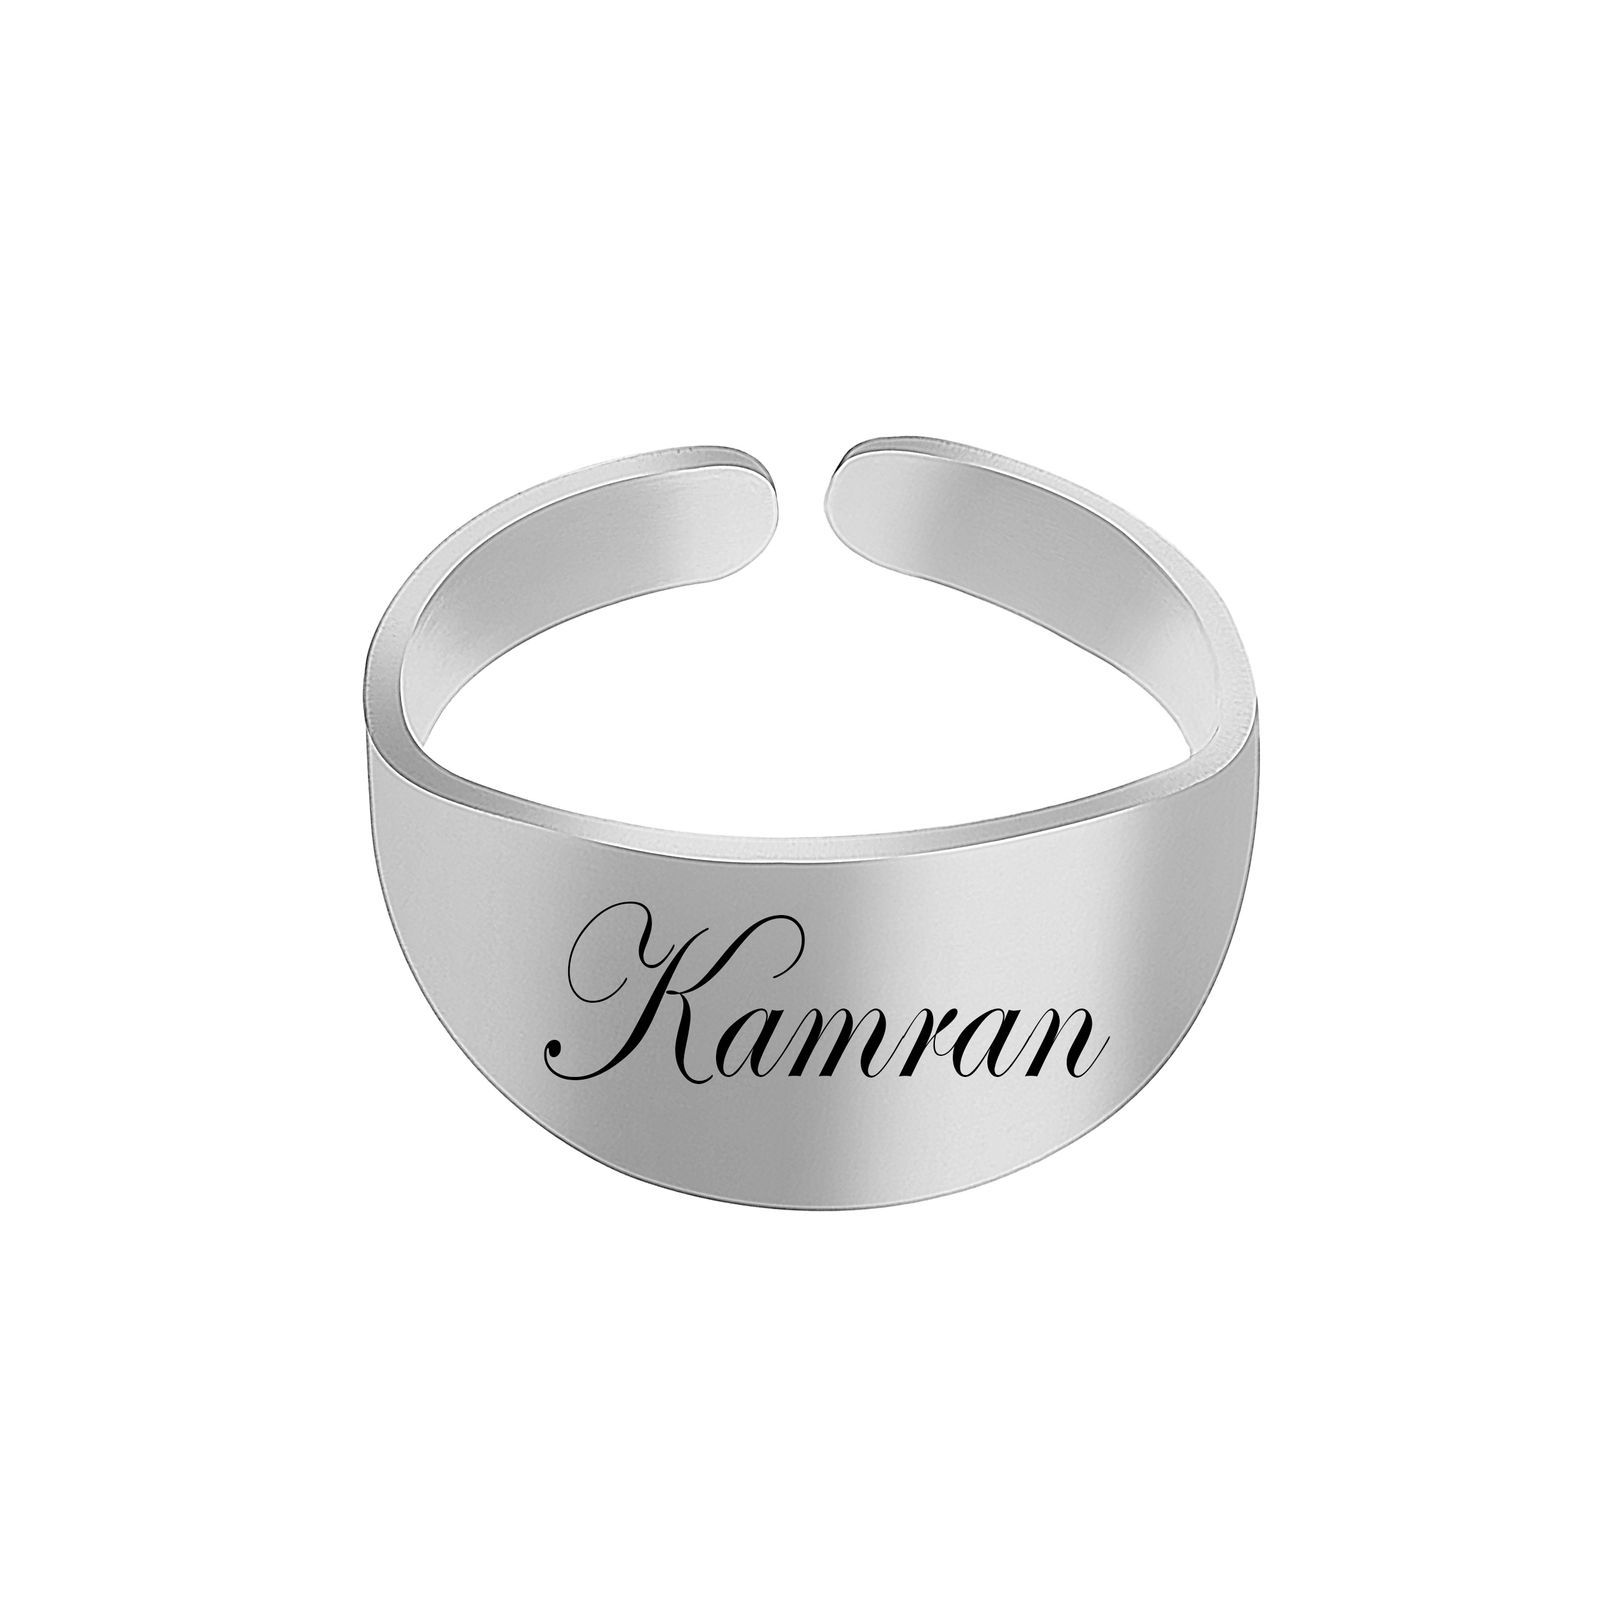 انگشتر مردانه لیردا مدل اسم کامران astl 00102 -  - 1